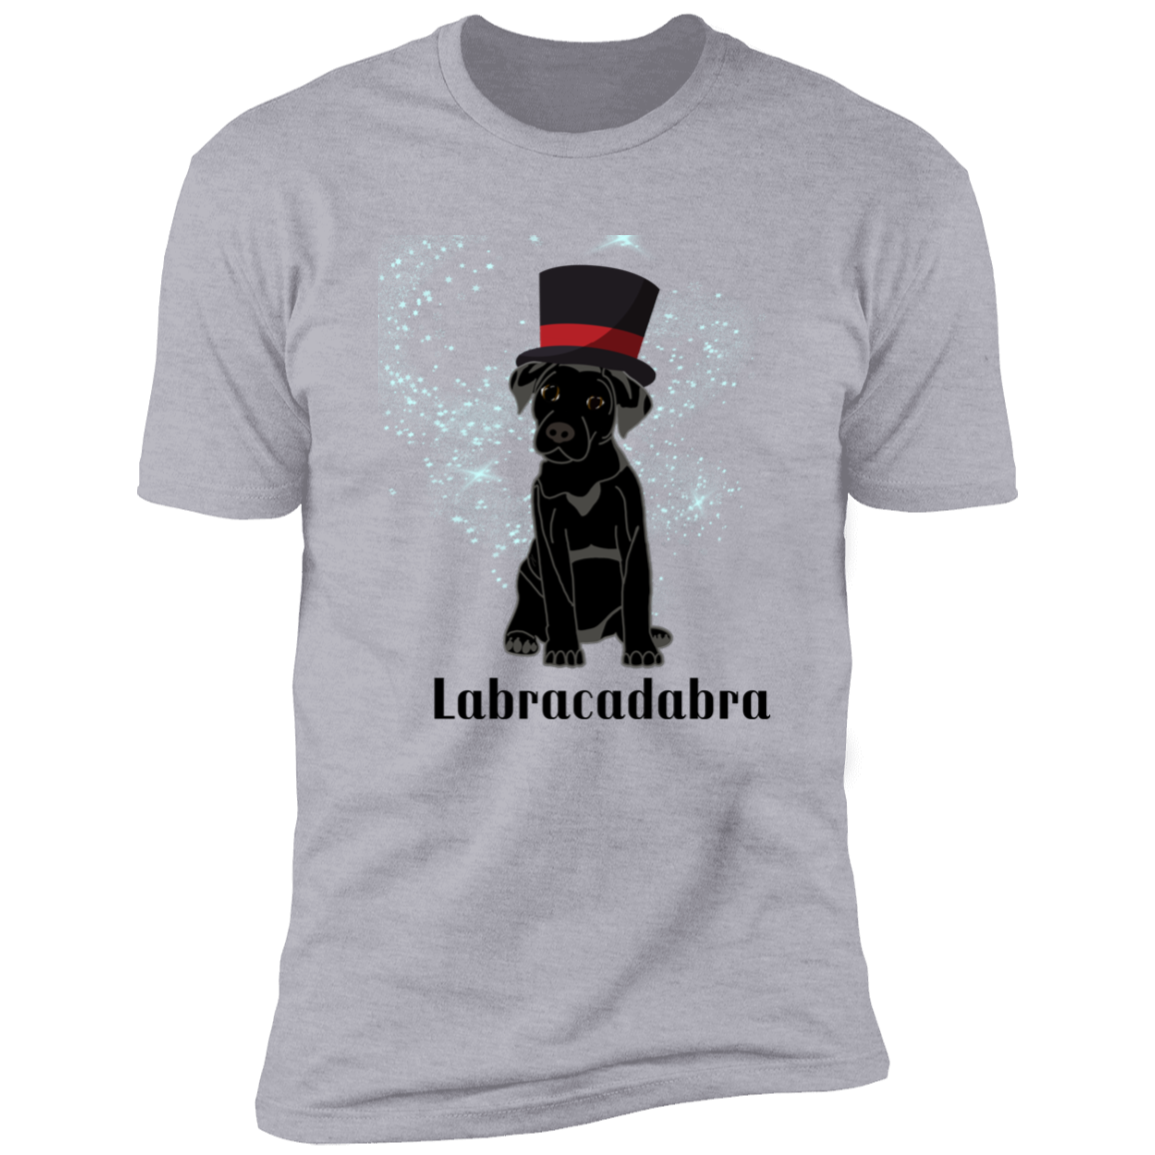 Labracadabra funny dog shirt, funny dog shirt for humans, funny labrador shirt. in light heather gray